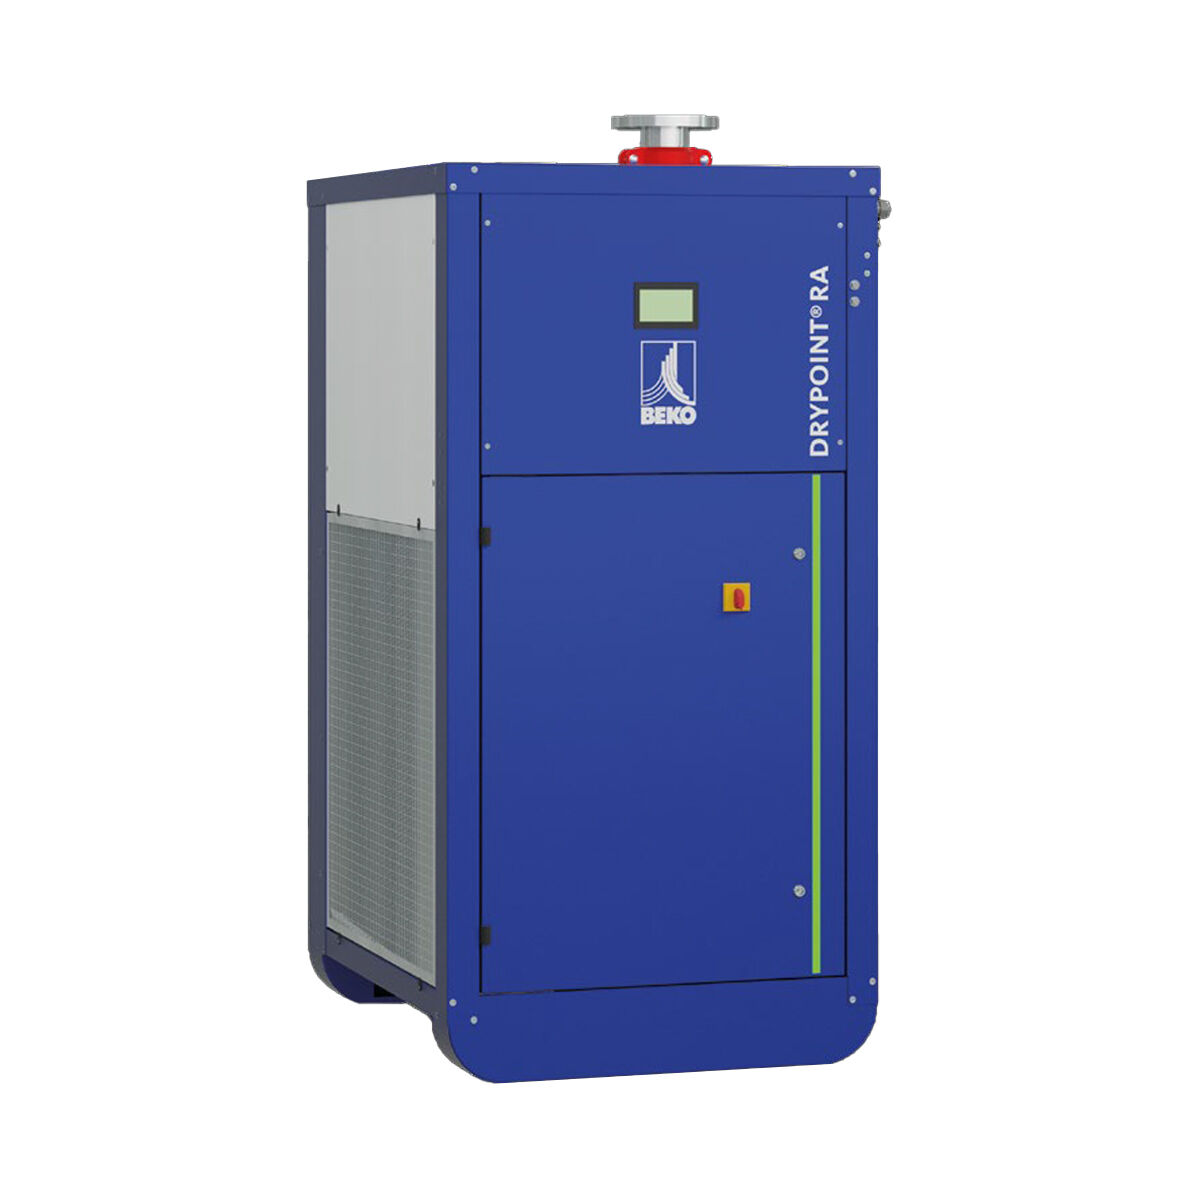 BEKO DRYPOINT RA III 330/AC essiccatore a refrigerazione ad aria compressa con Bekomat, raffreddato ad aria